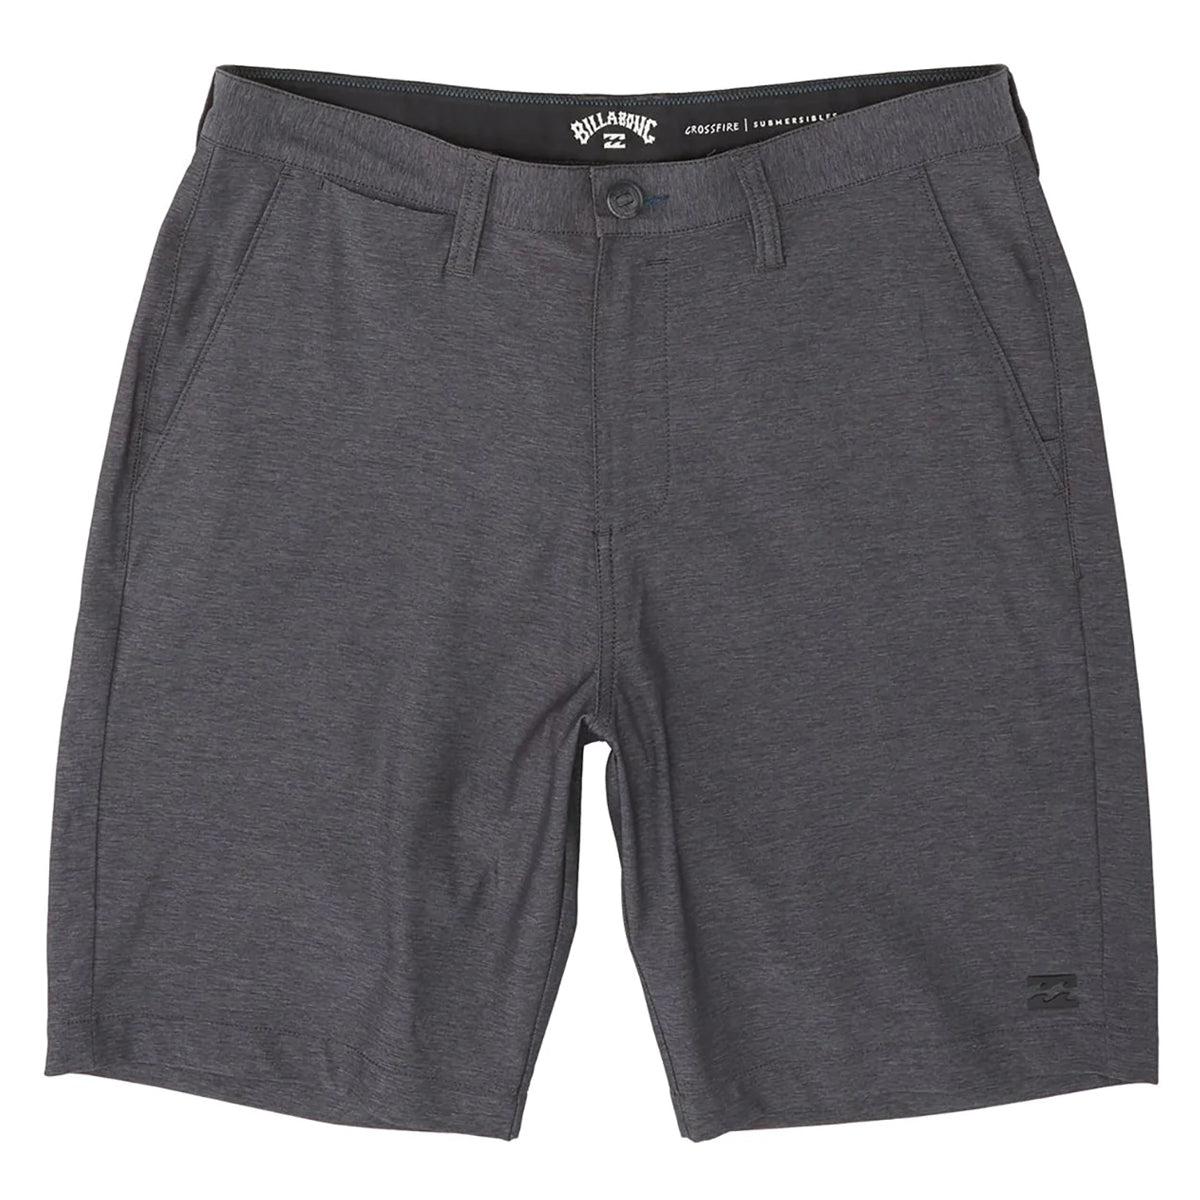 Billabong Crossfire Twill Men's Hybrid Shorts